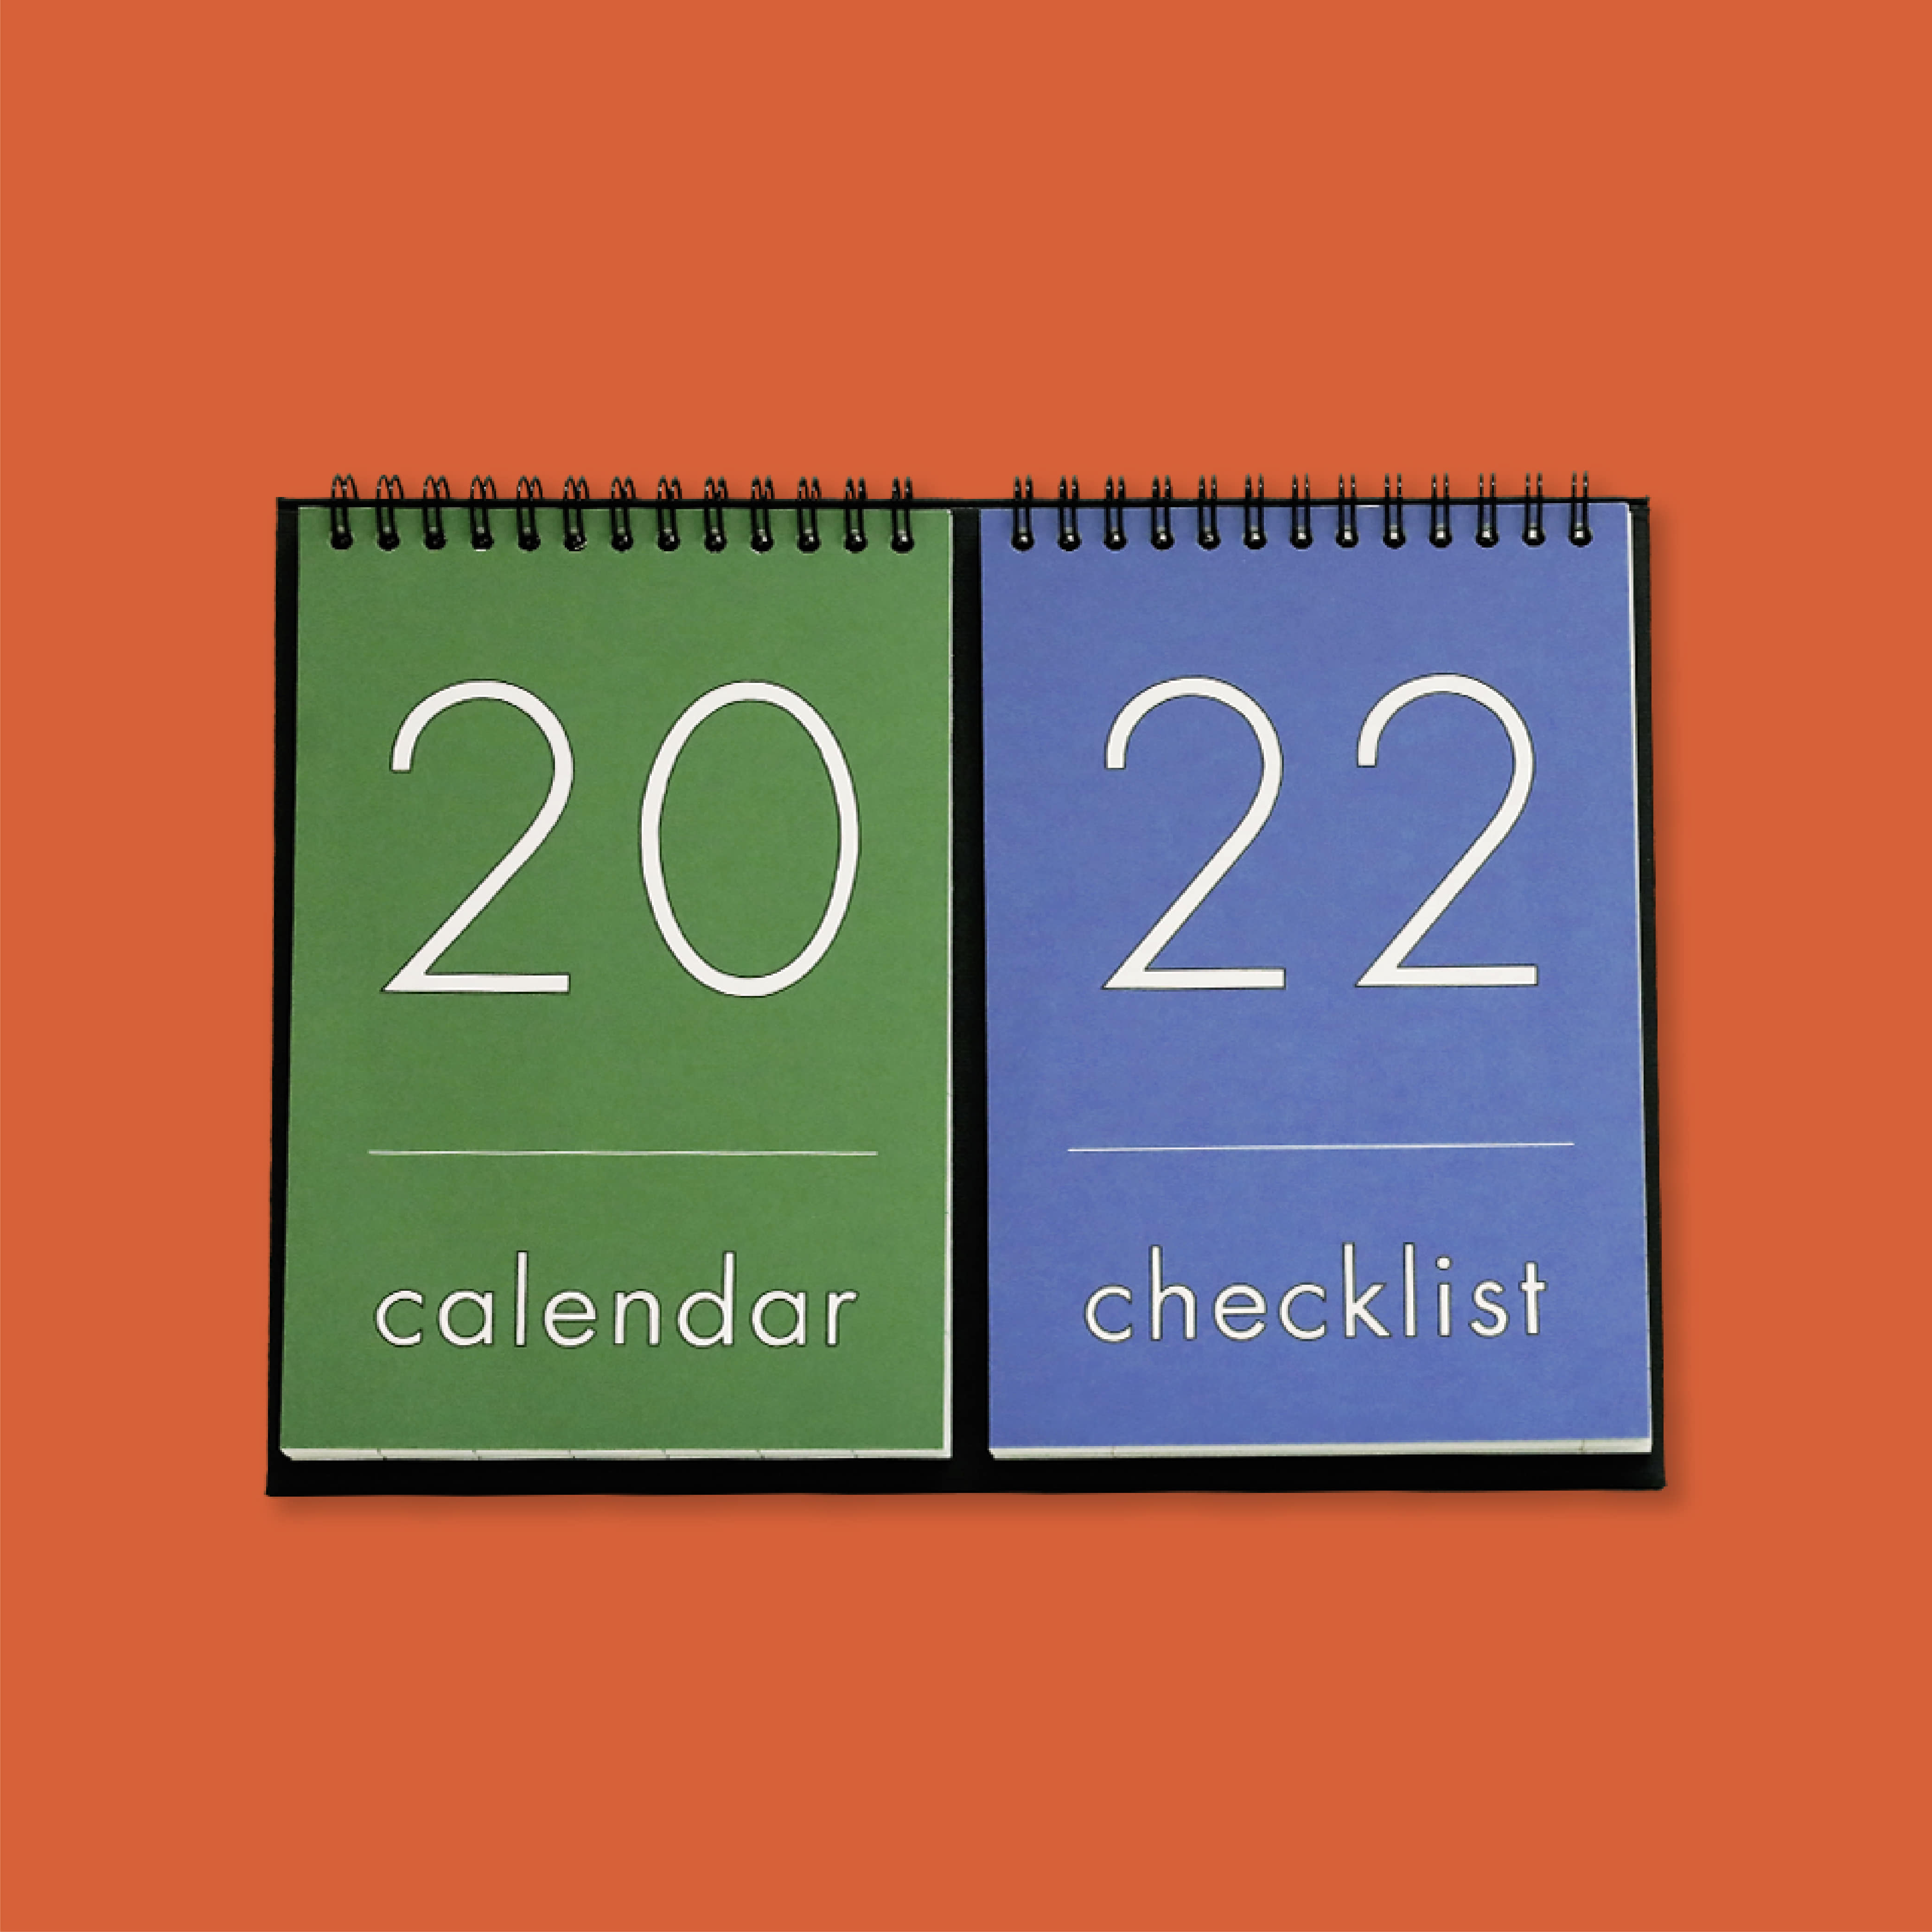 [Calendar] 2022 Desk Calendar